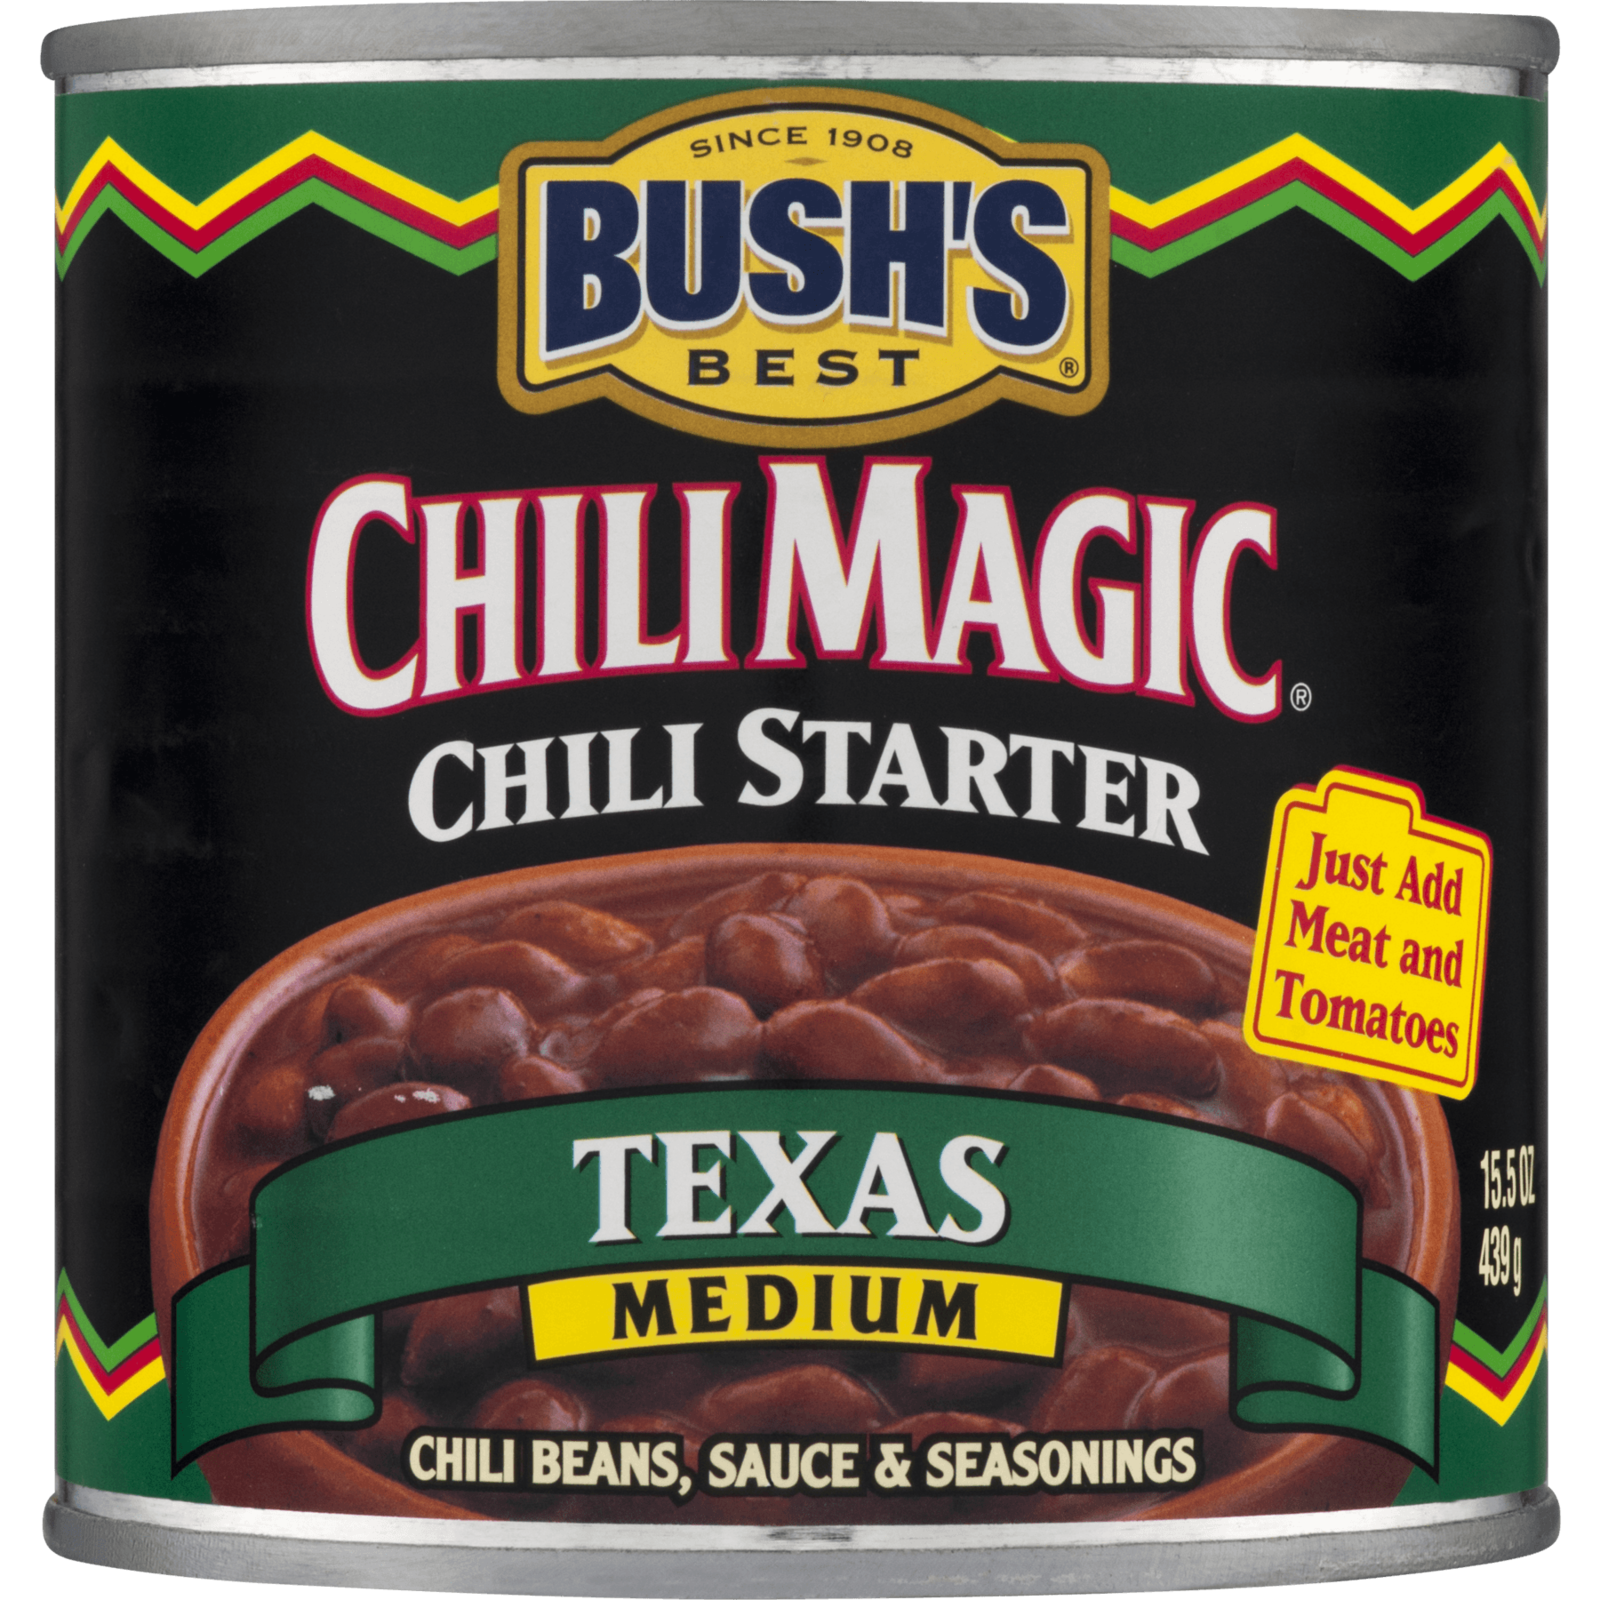 Primary image for BUSH'S BEST Chili Magic Canned Texas Recipe Chili Magic - Medium - 15.5 Oz Can